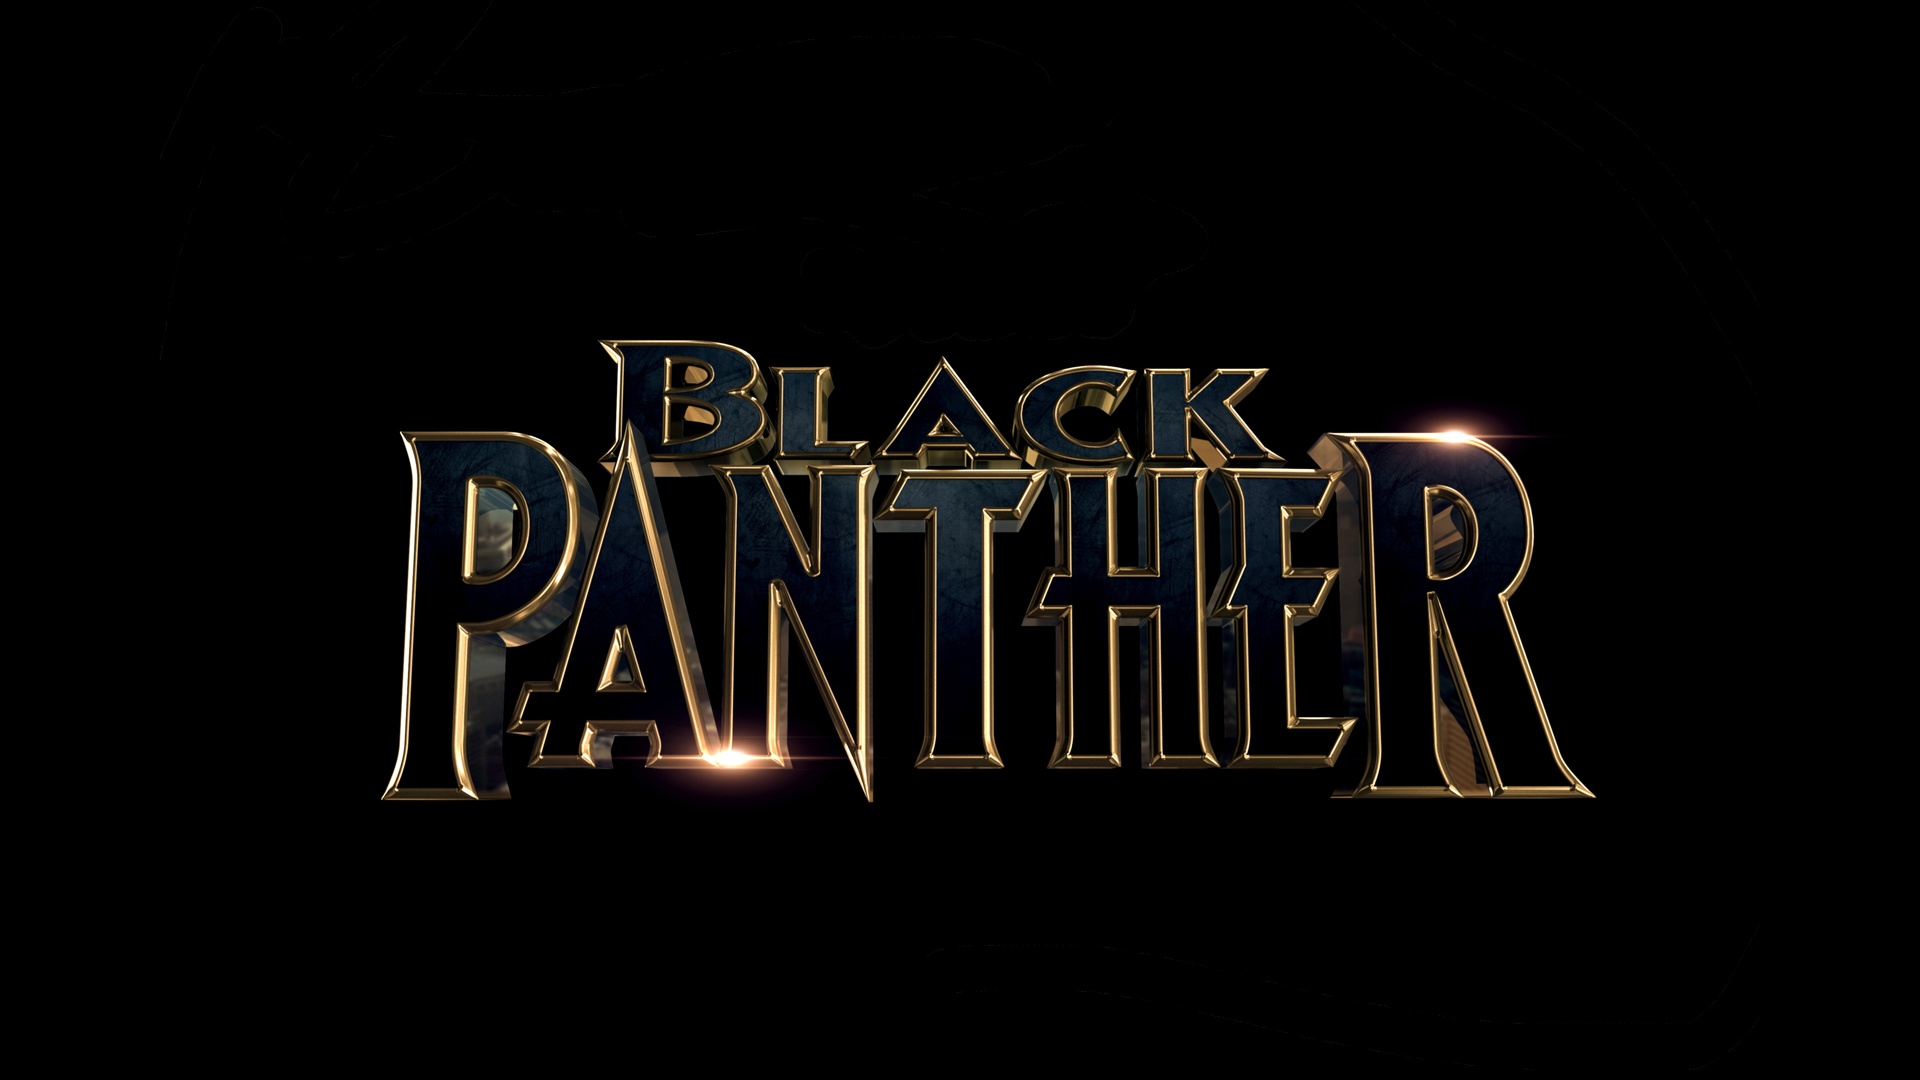 Black Panther - fond d'écran 4K.jpg